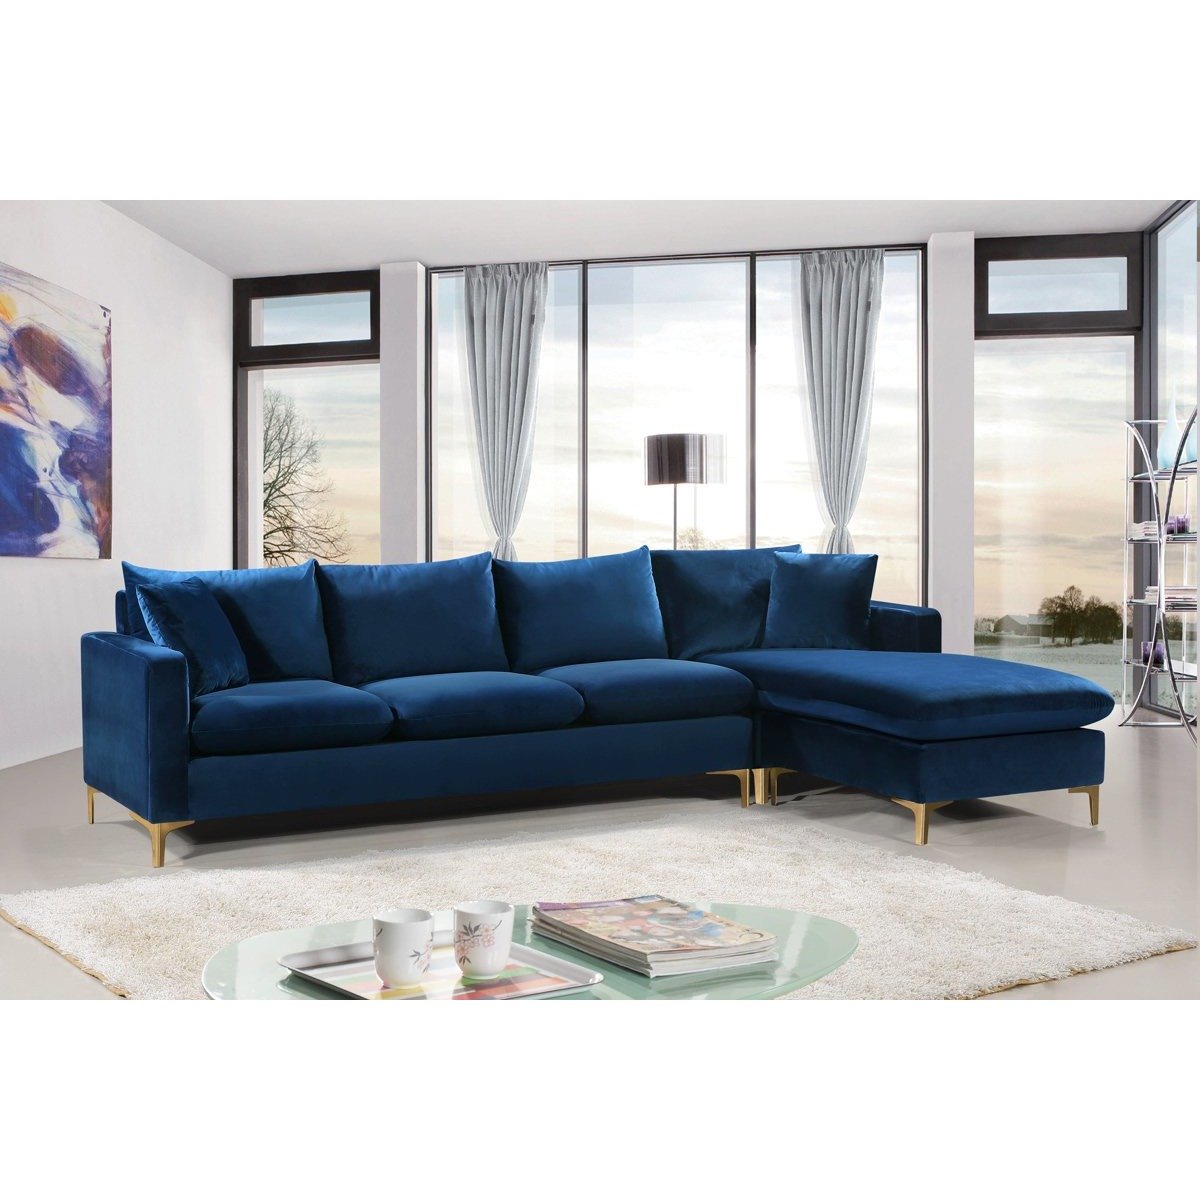 Meridian Furniture Naomi Navy Velvet 2pc. Reversible Sectional